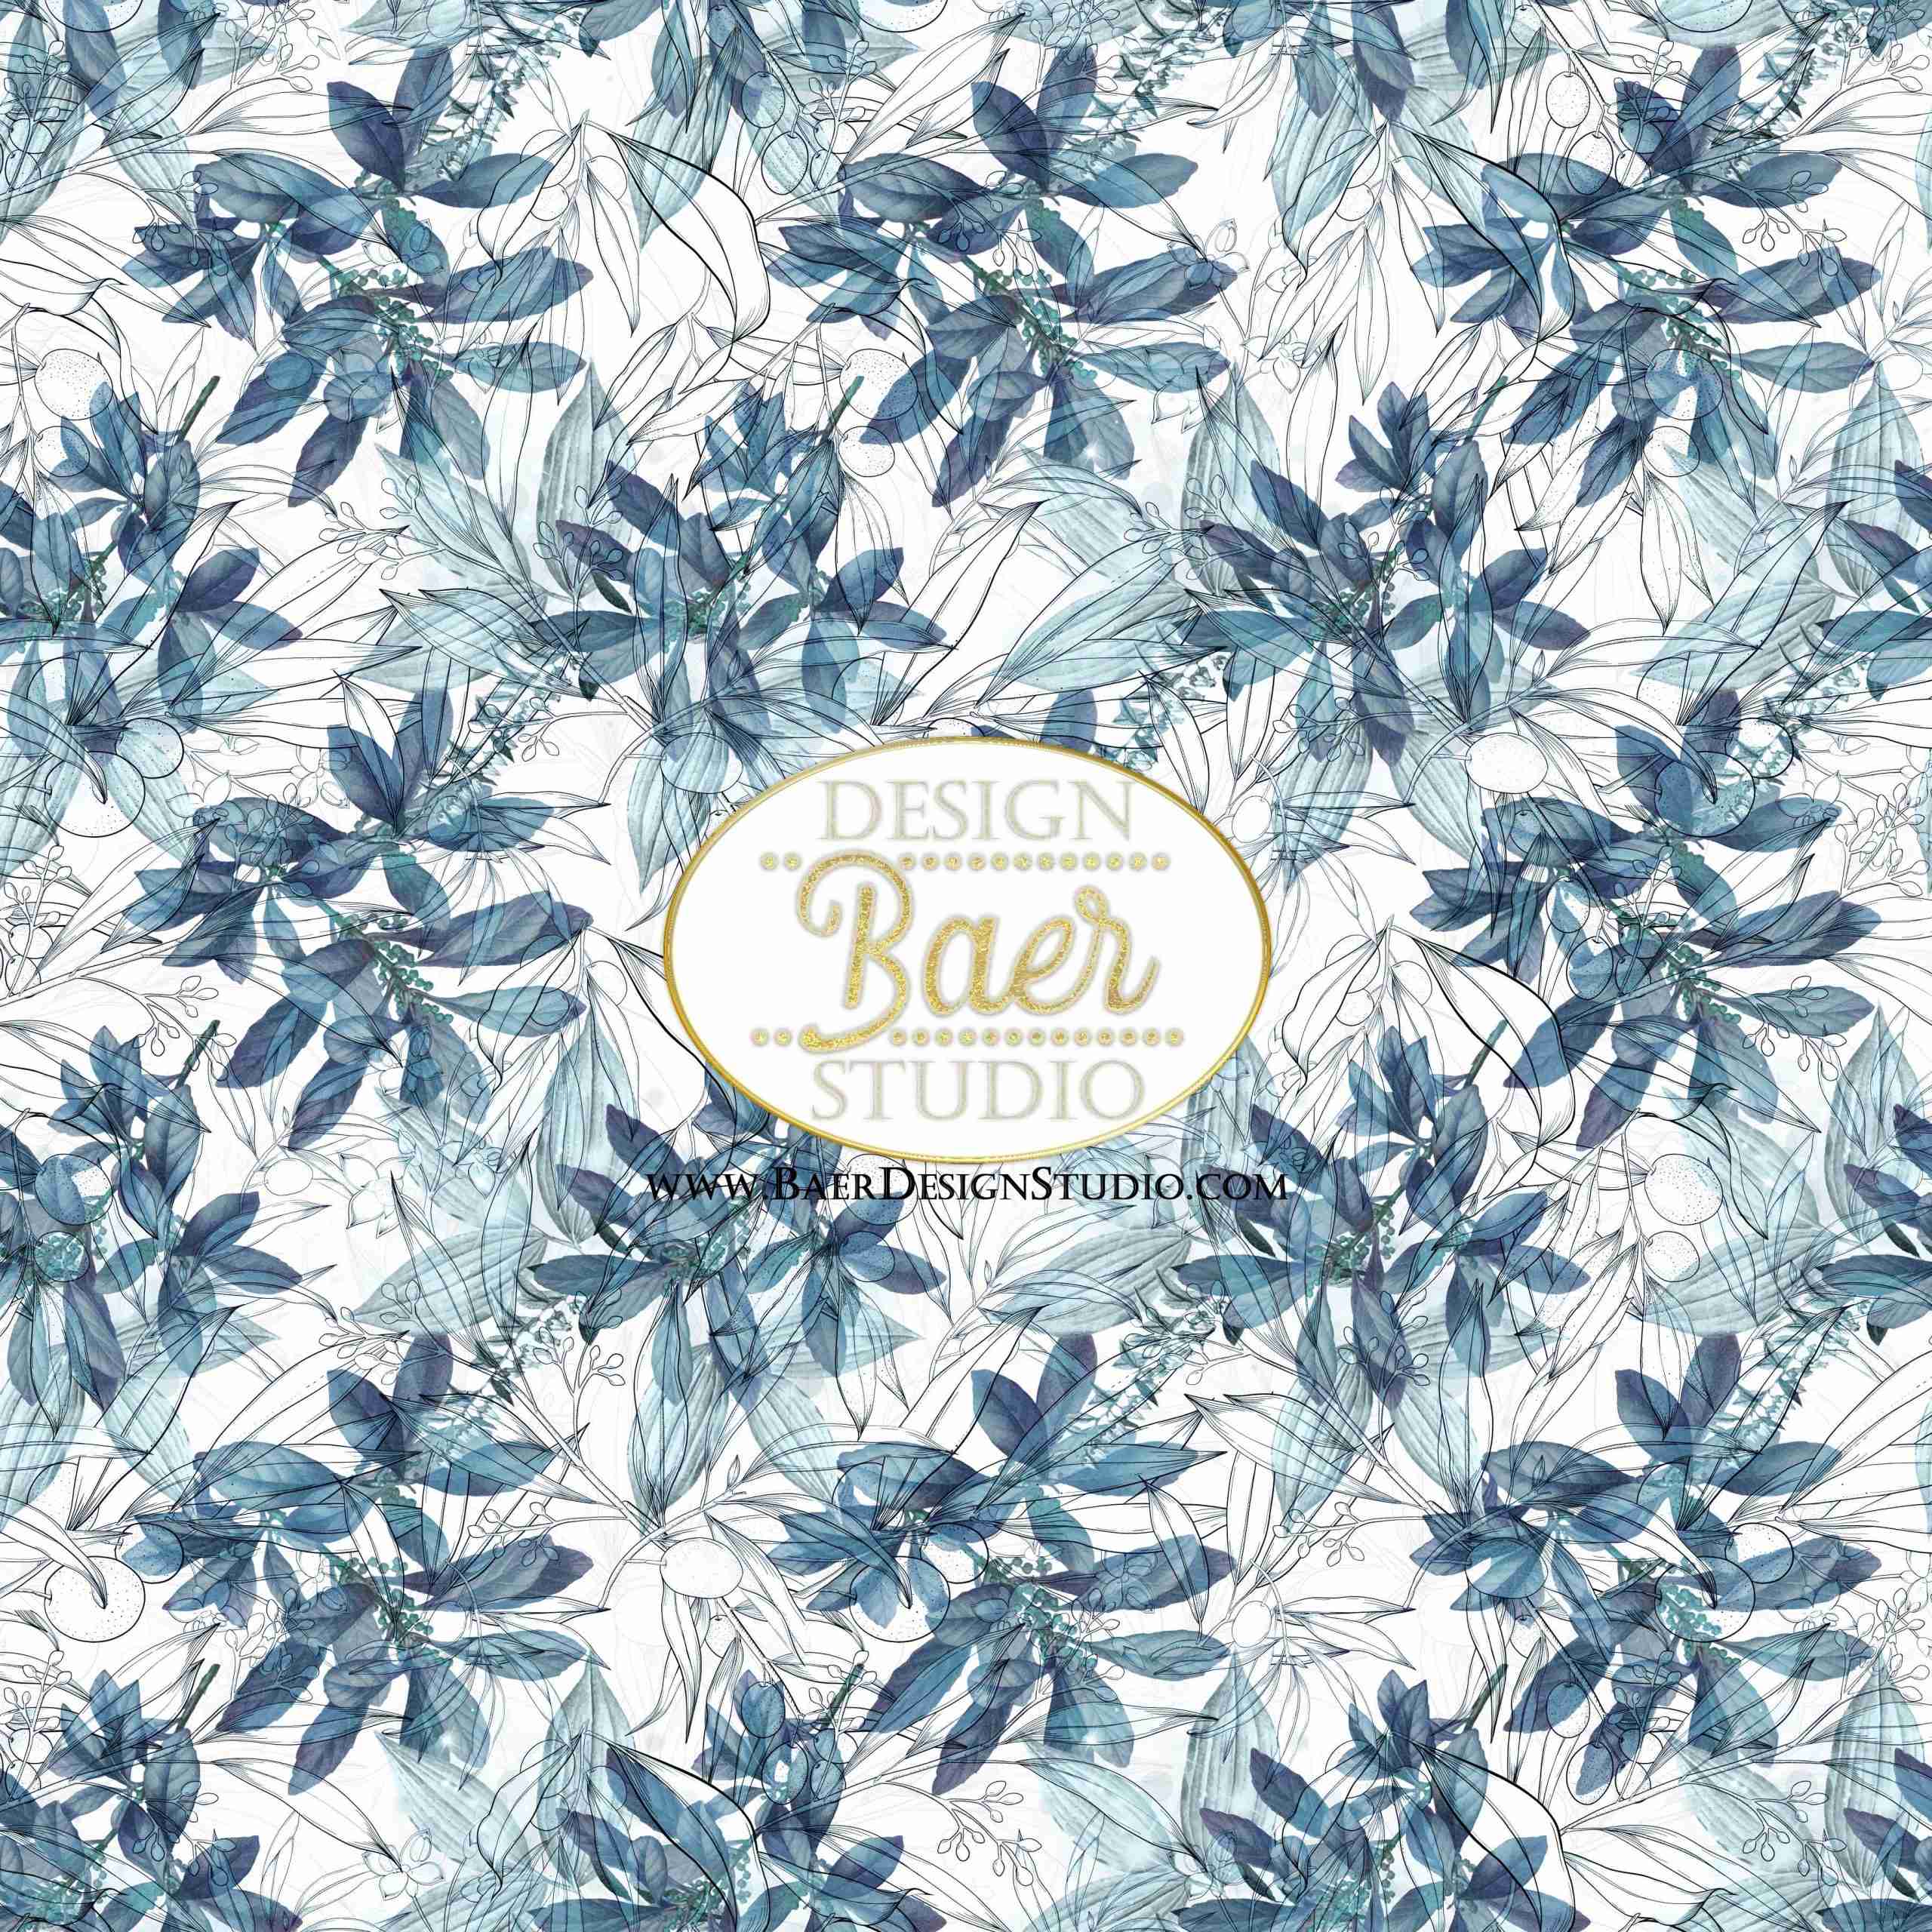 NEW Dusty Blue Floral Seamless Paper, Blue and Gold Leaf Digital Paper Pack  7122 - Baer Design Studio